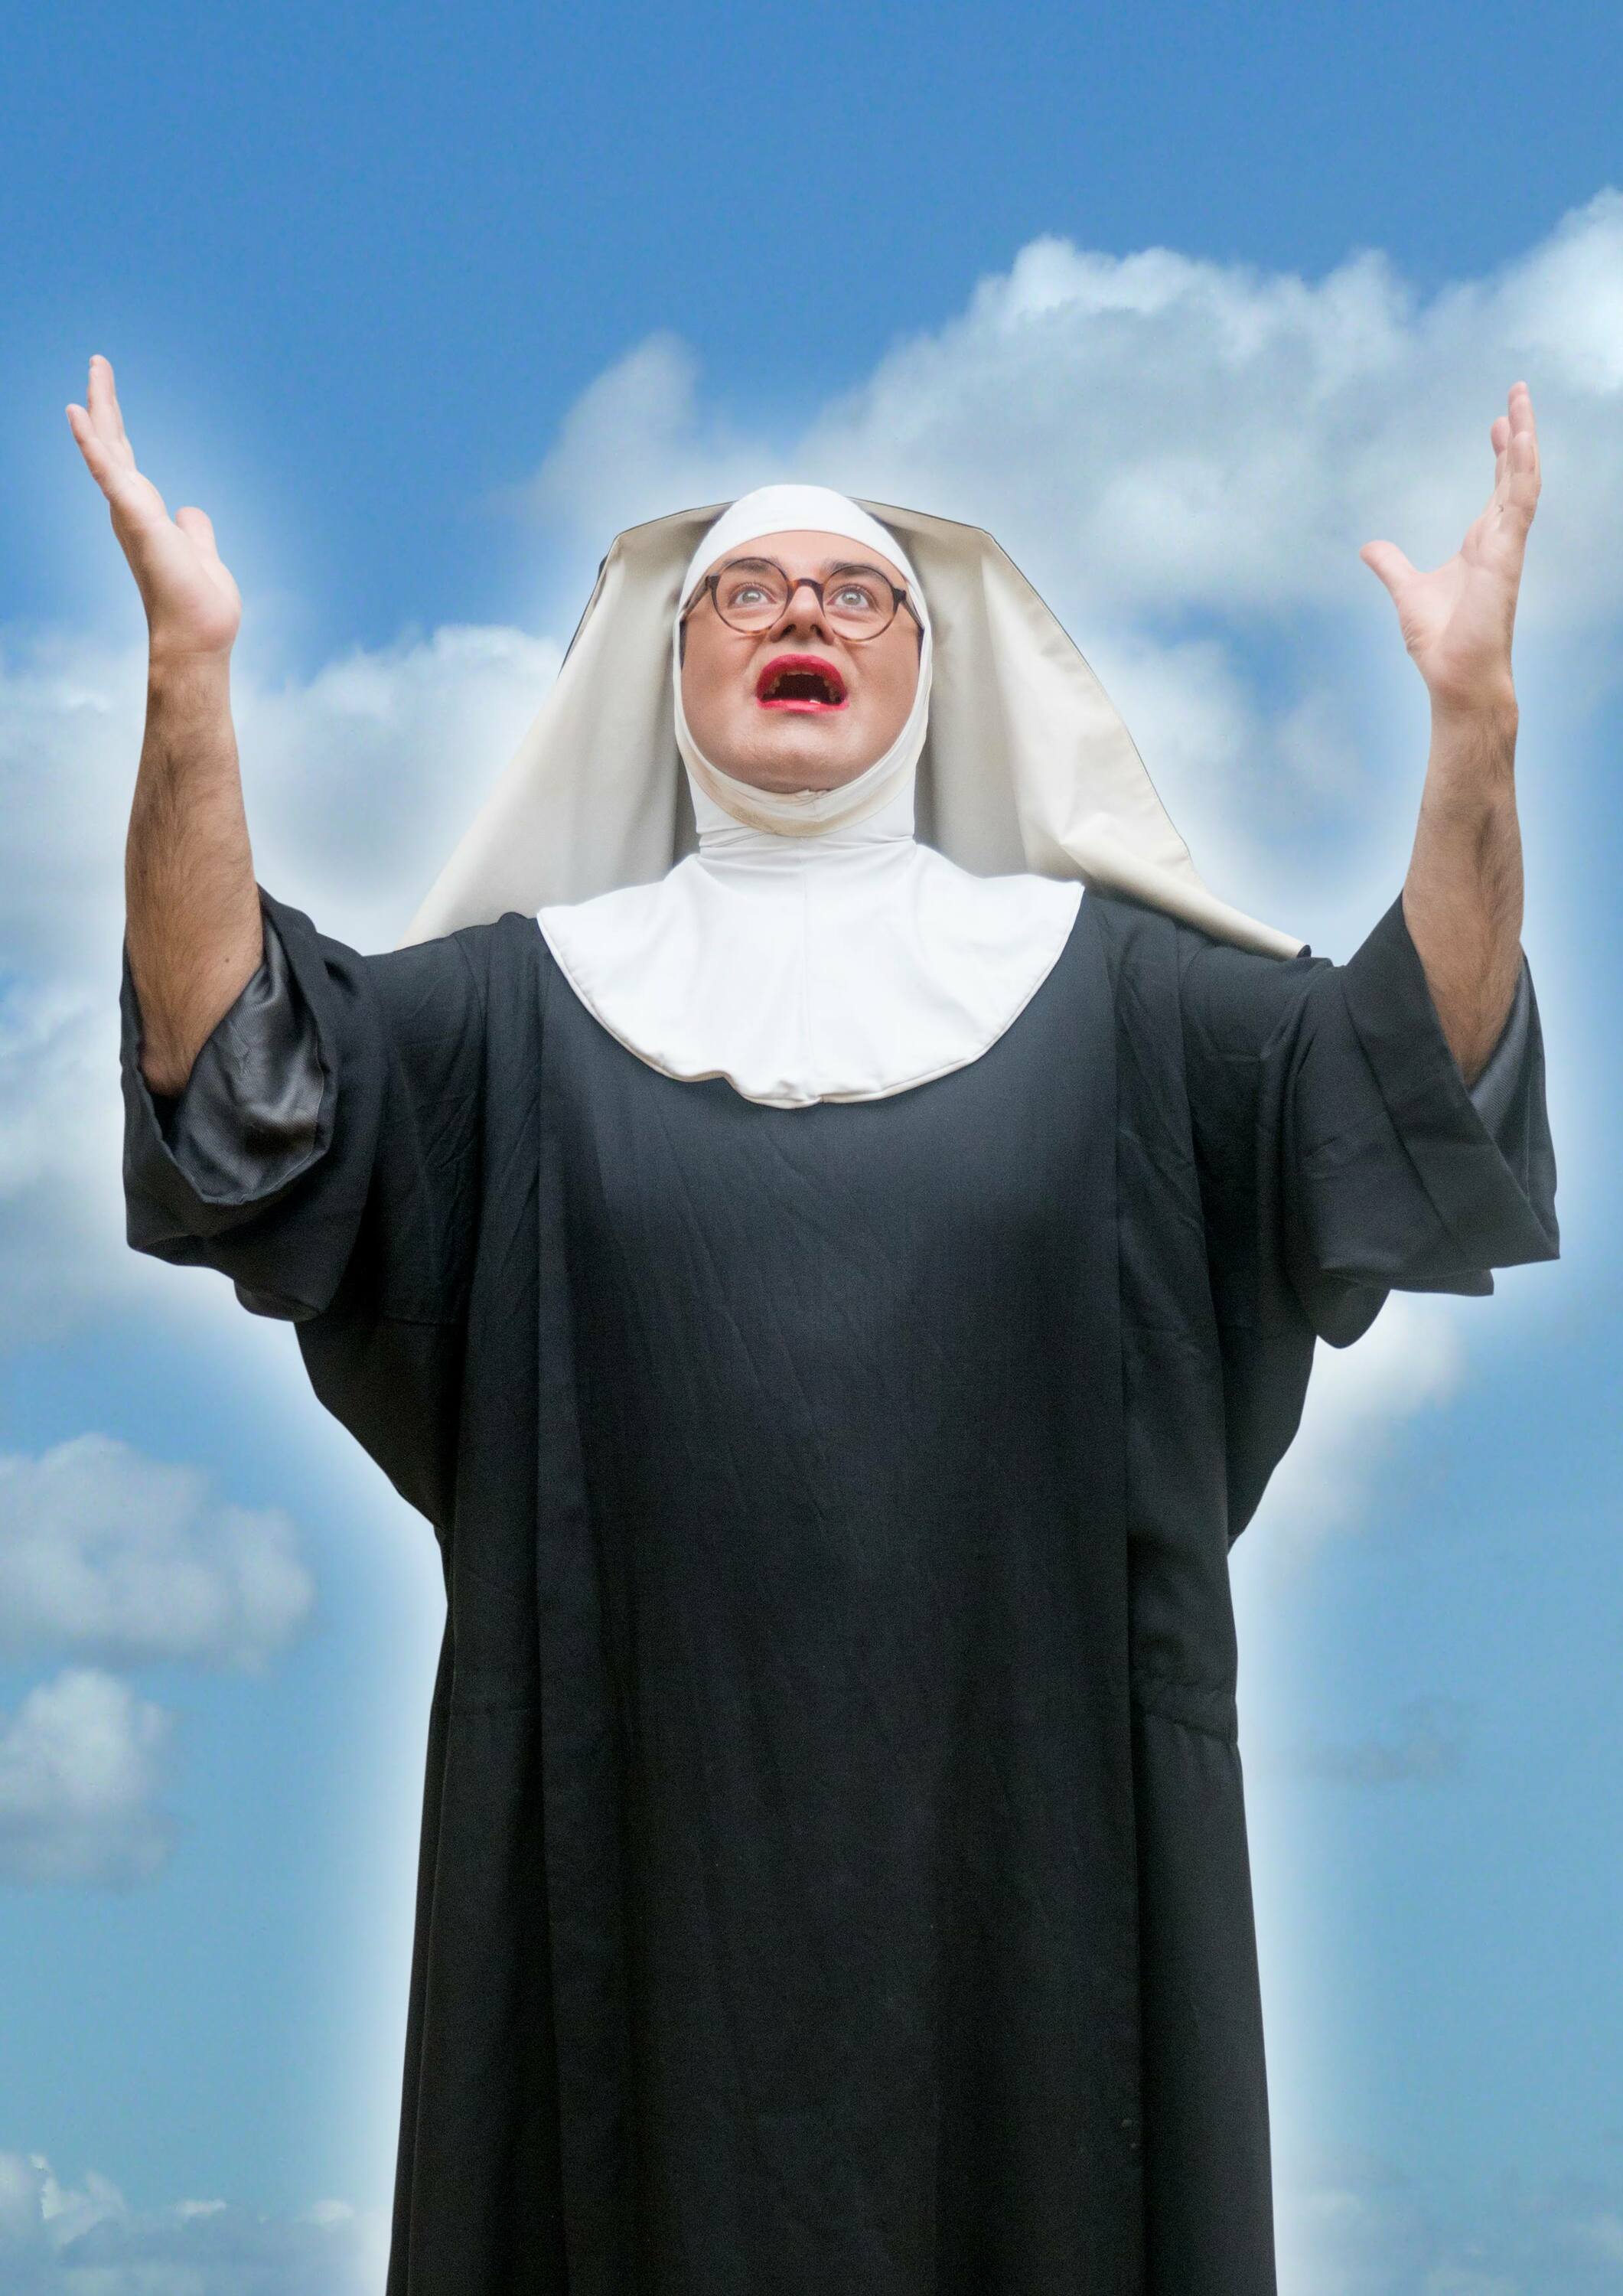 A drag performer in a nun's habit.